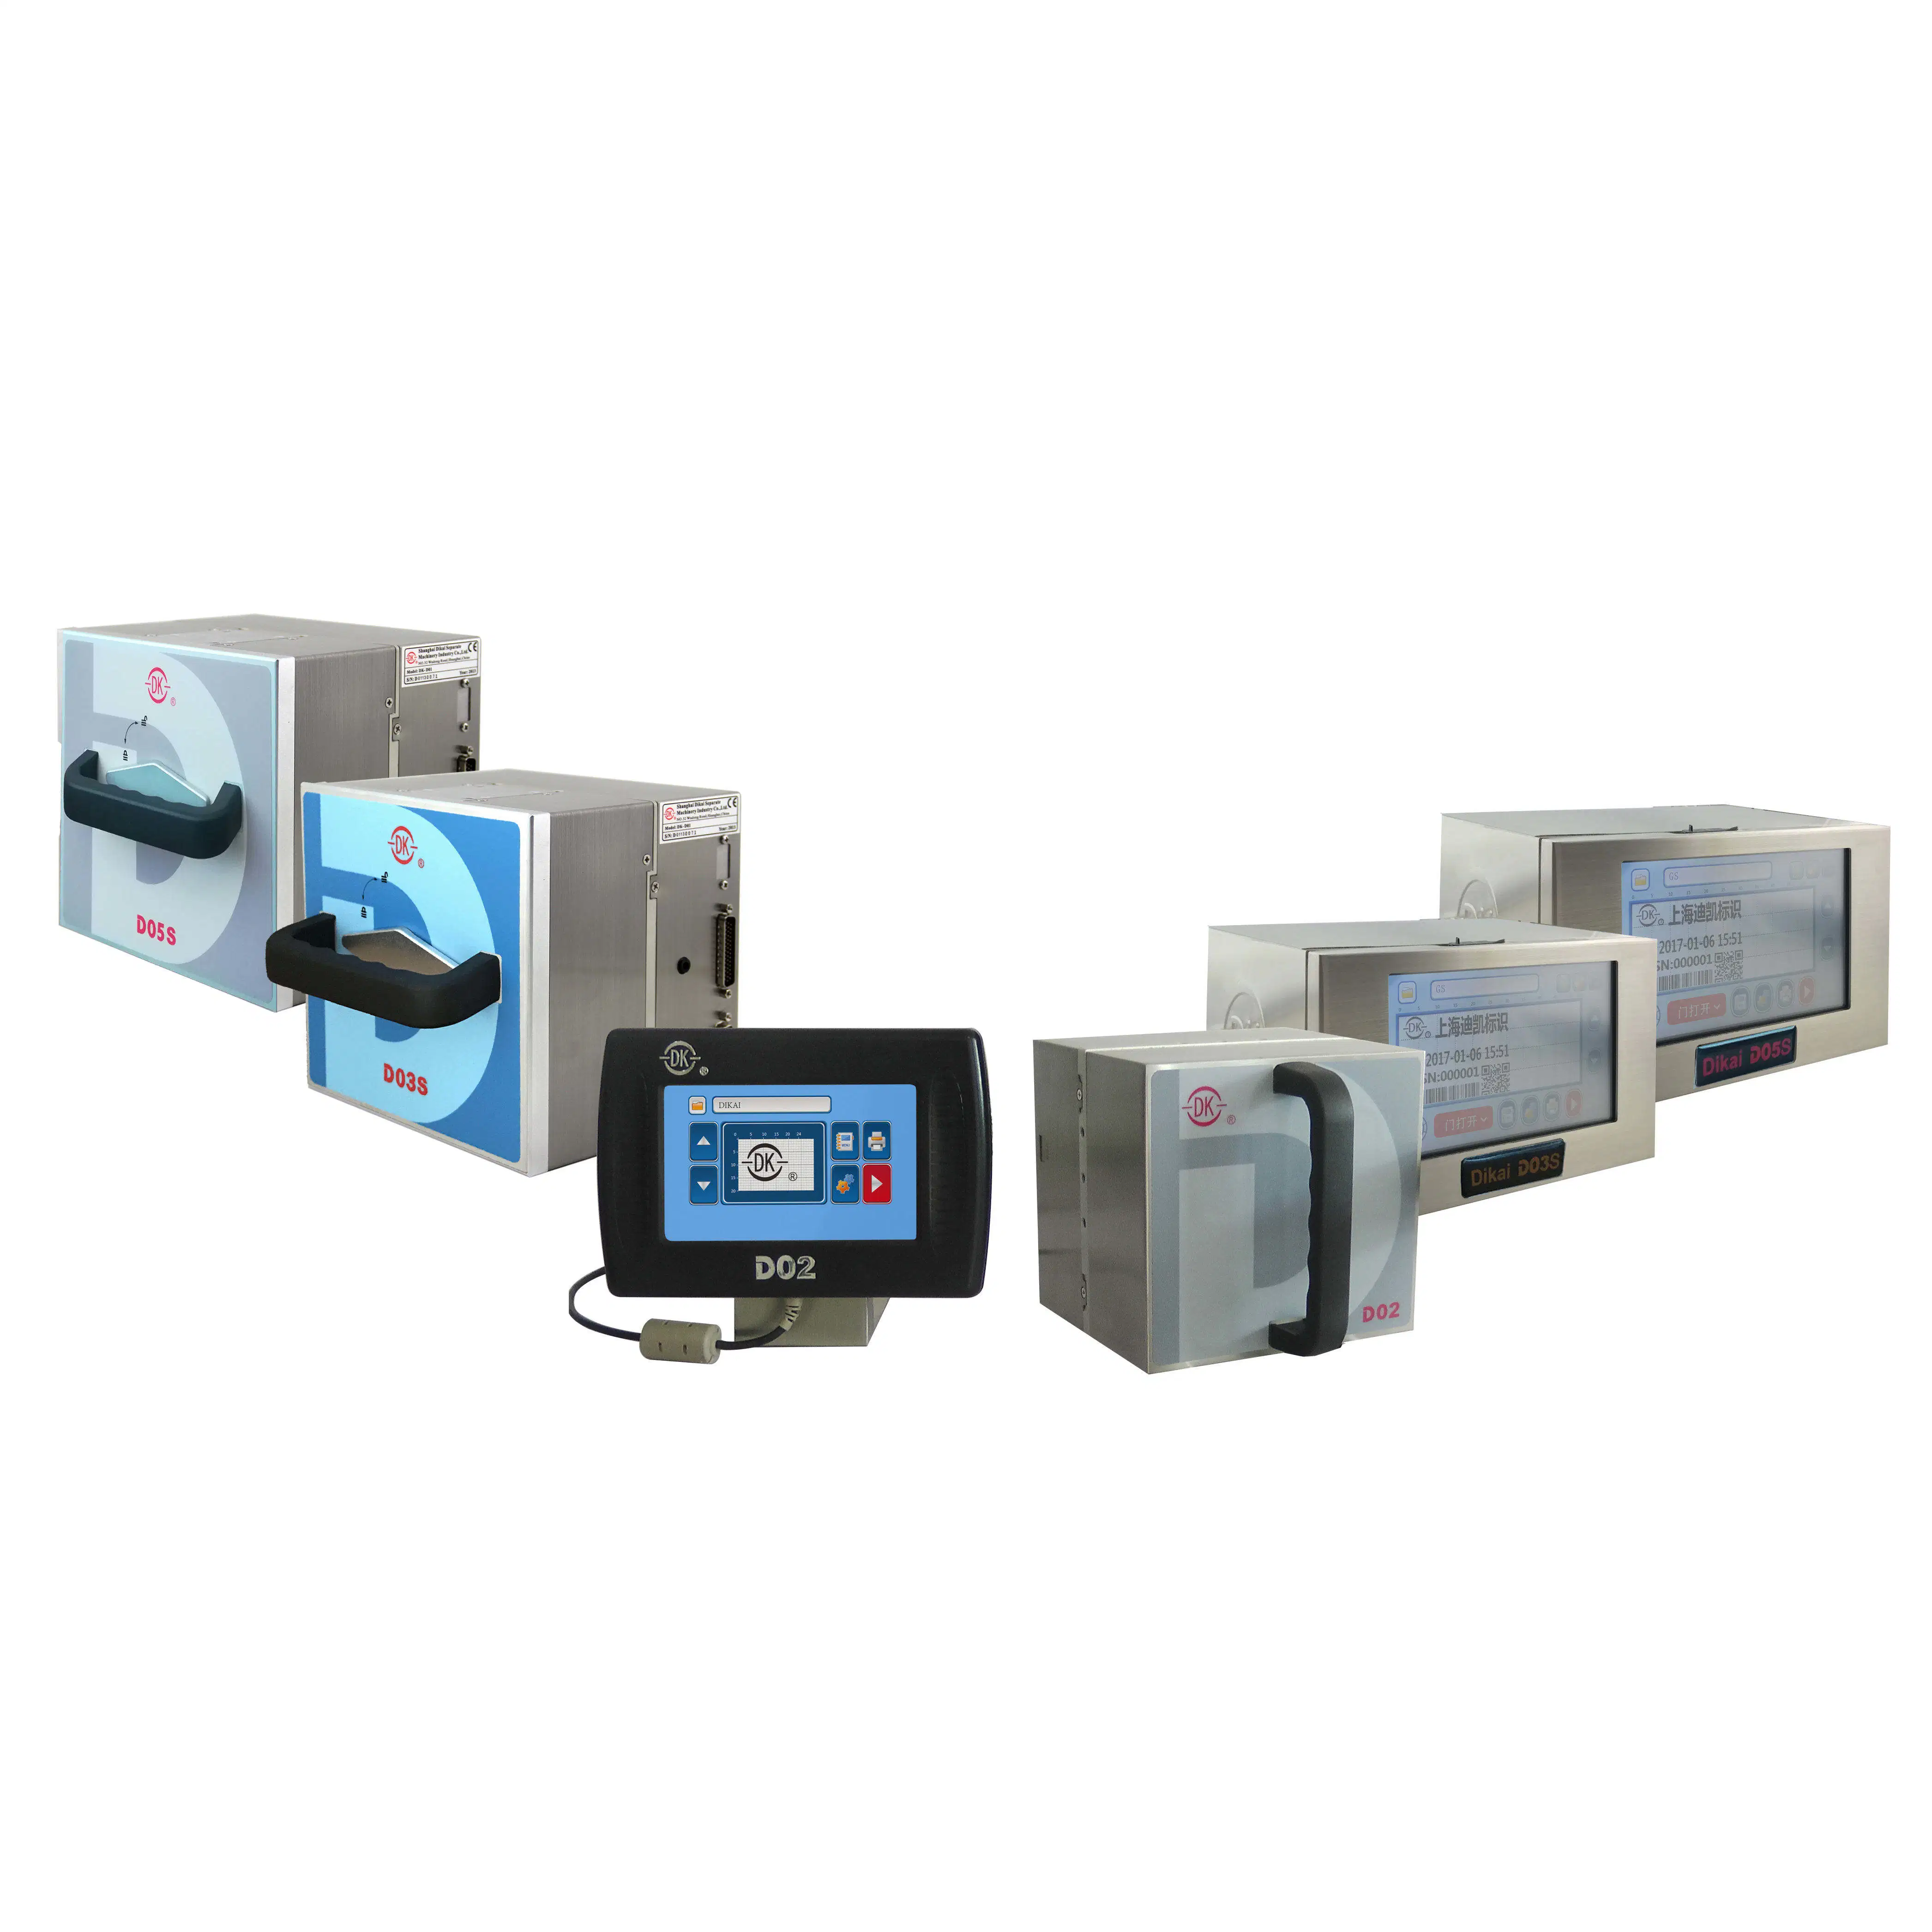 Hot Sale Tto Thermal Transfer Printer/ Tto Printer for Flow Packaging Machine/Thermal Transfer Overprinter Price